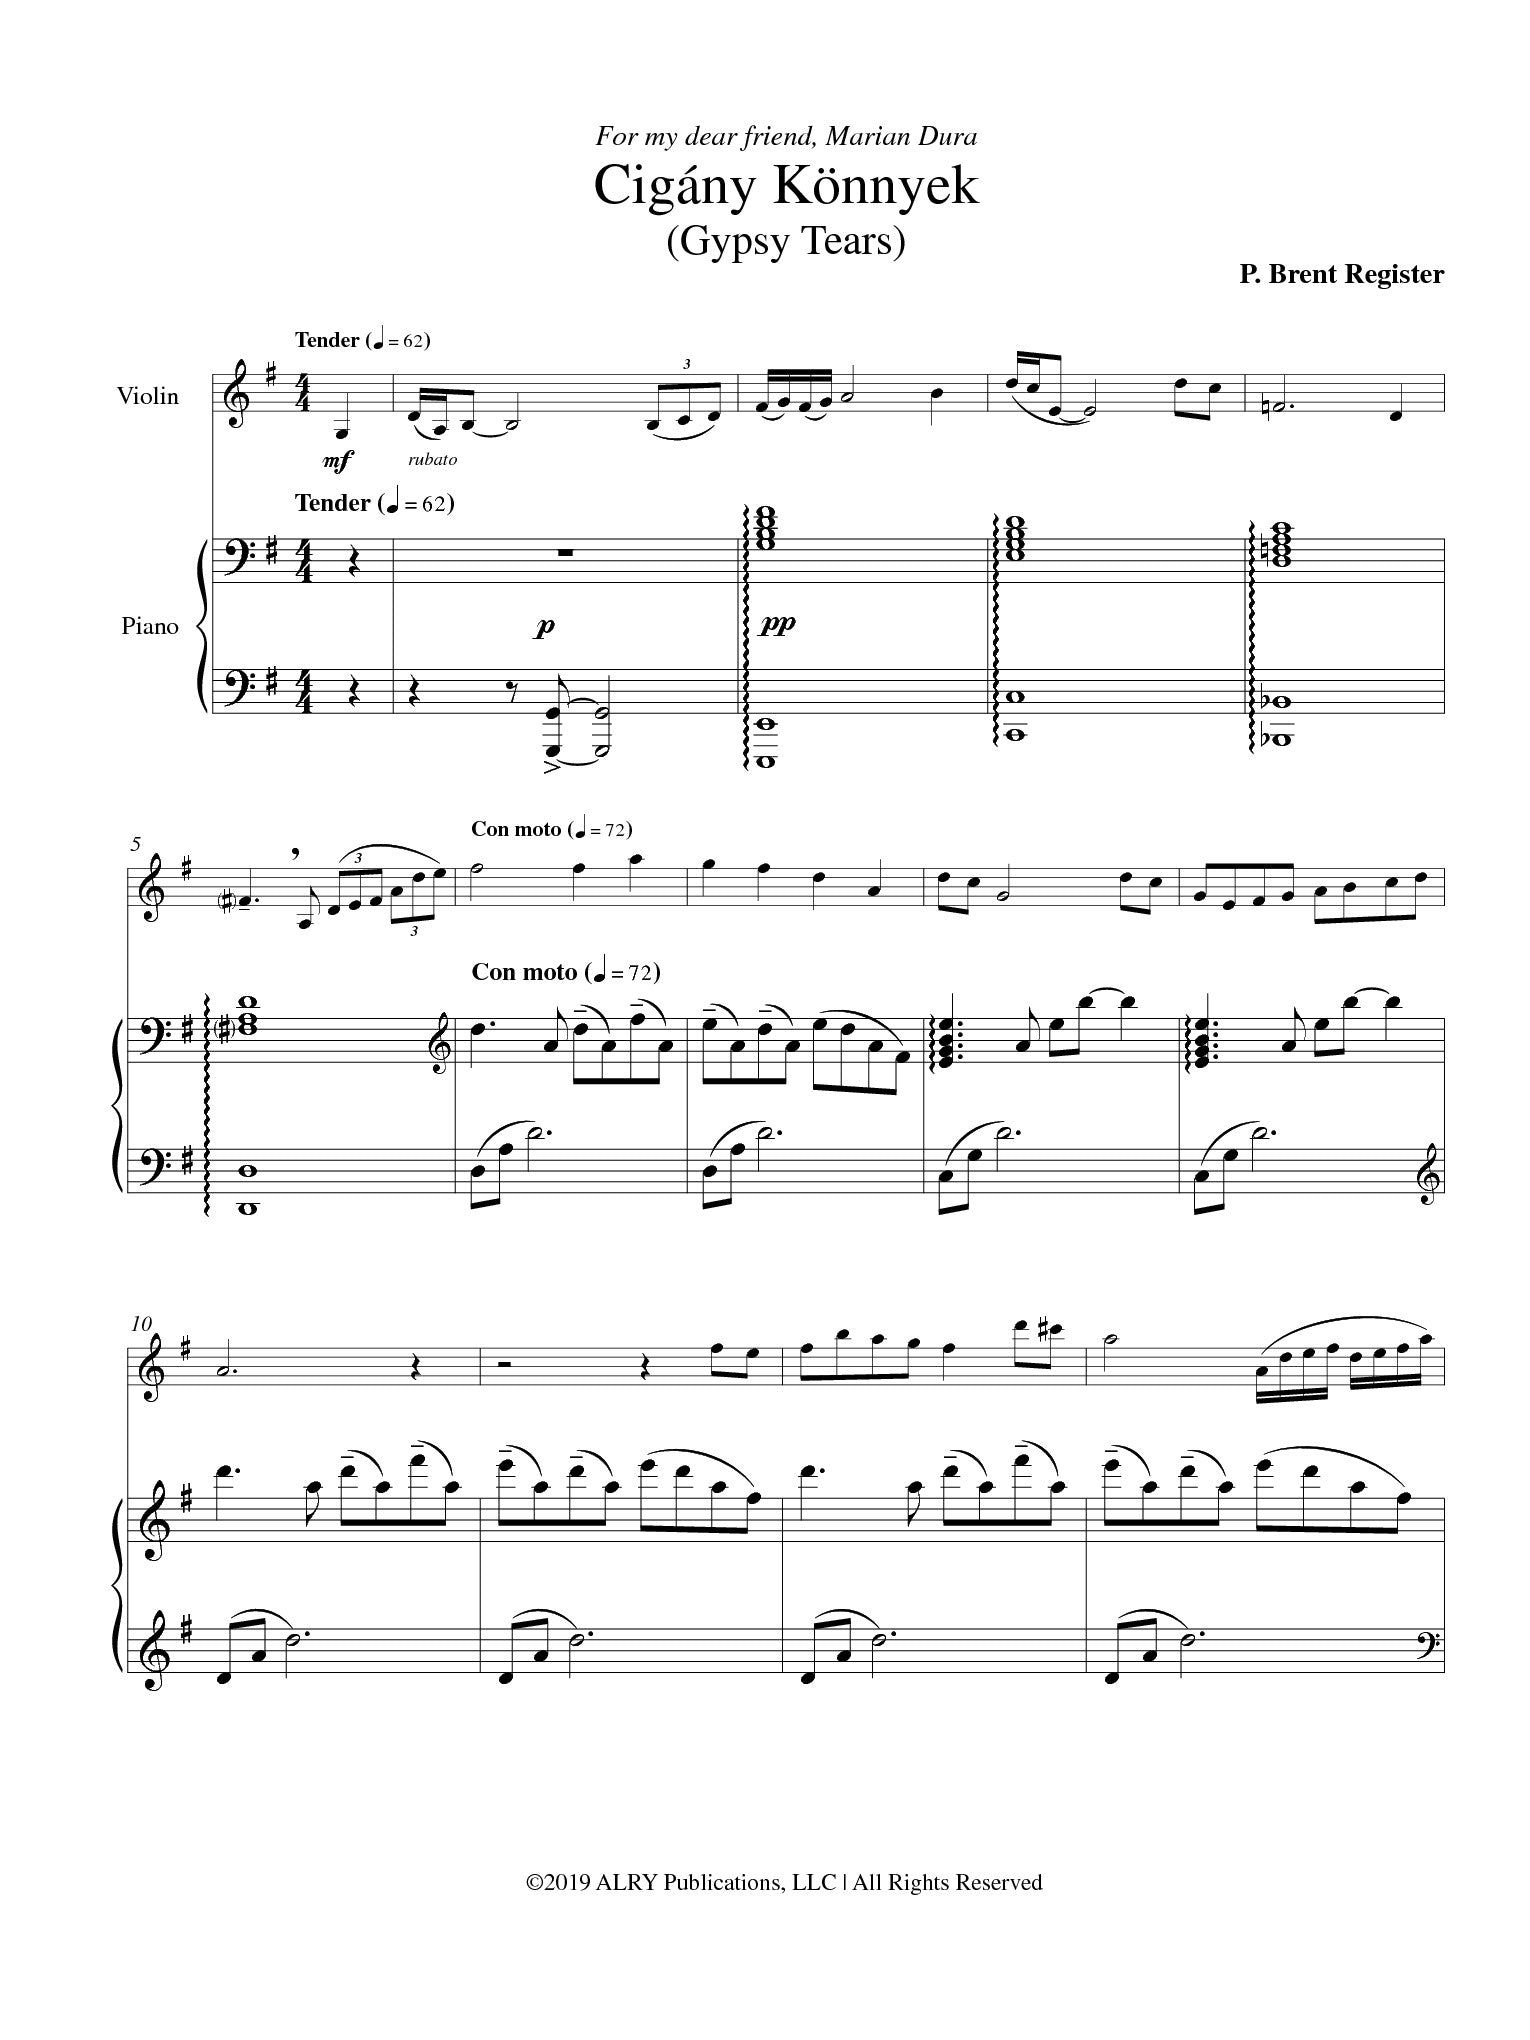 Register - Cigany Konnyek (Gypsy Tears) for Violin and - VLP04 | United Music and Media Publishers